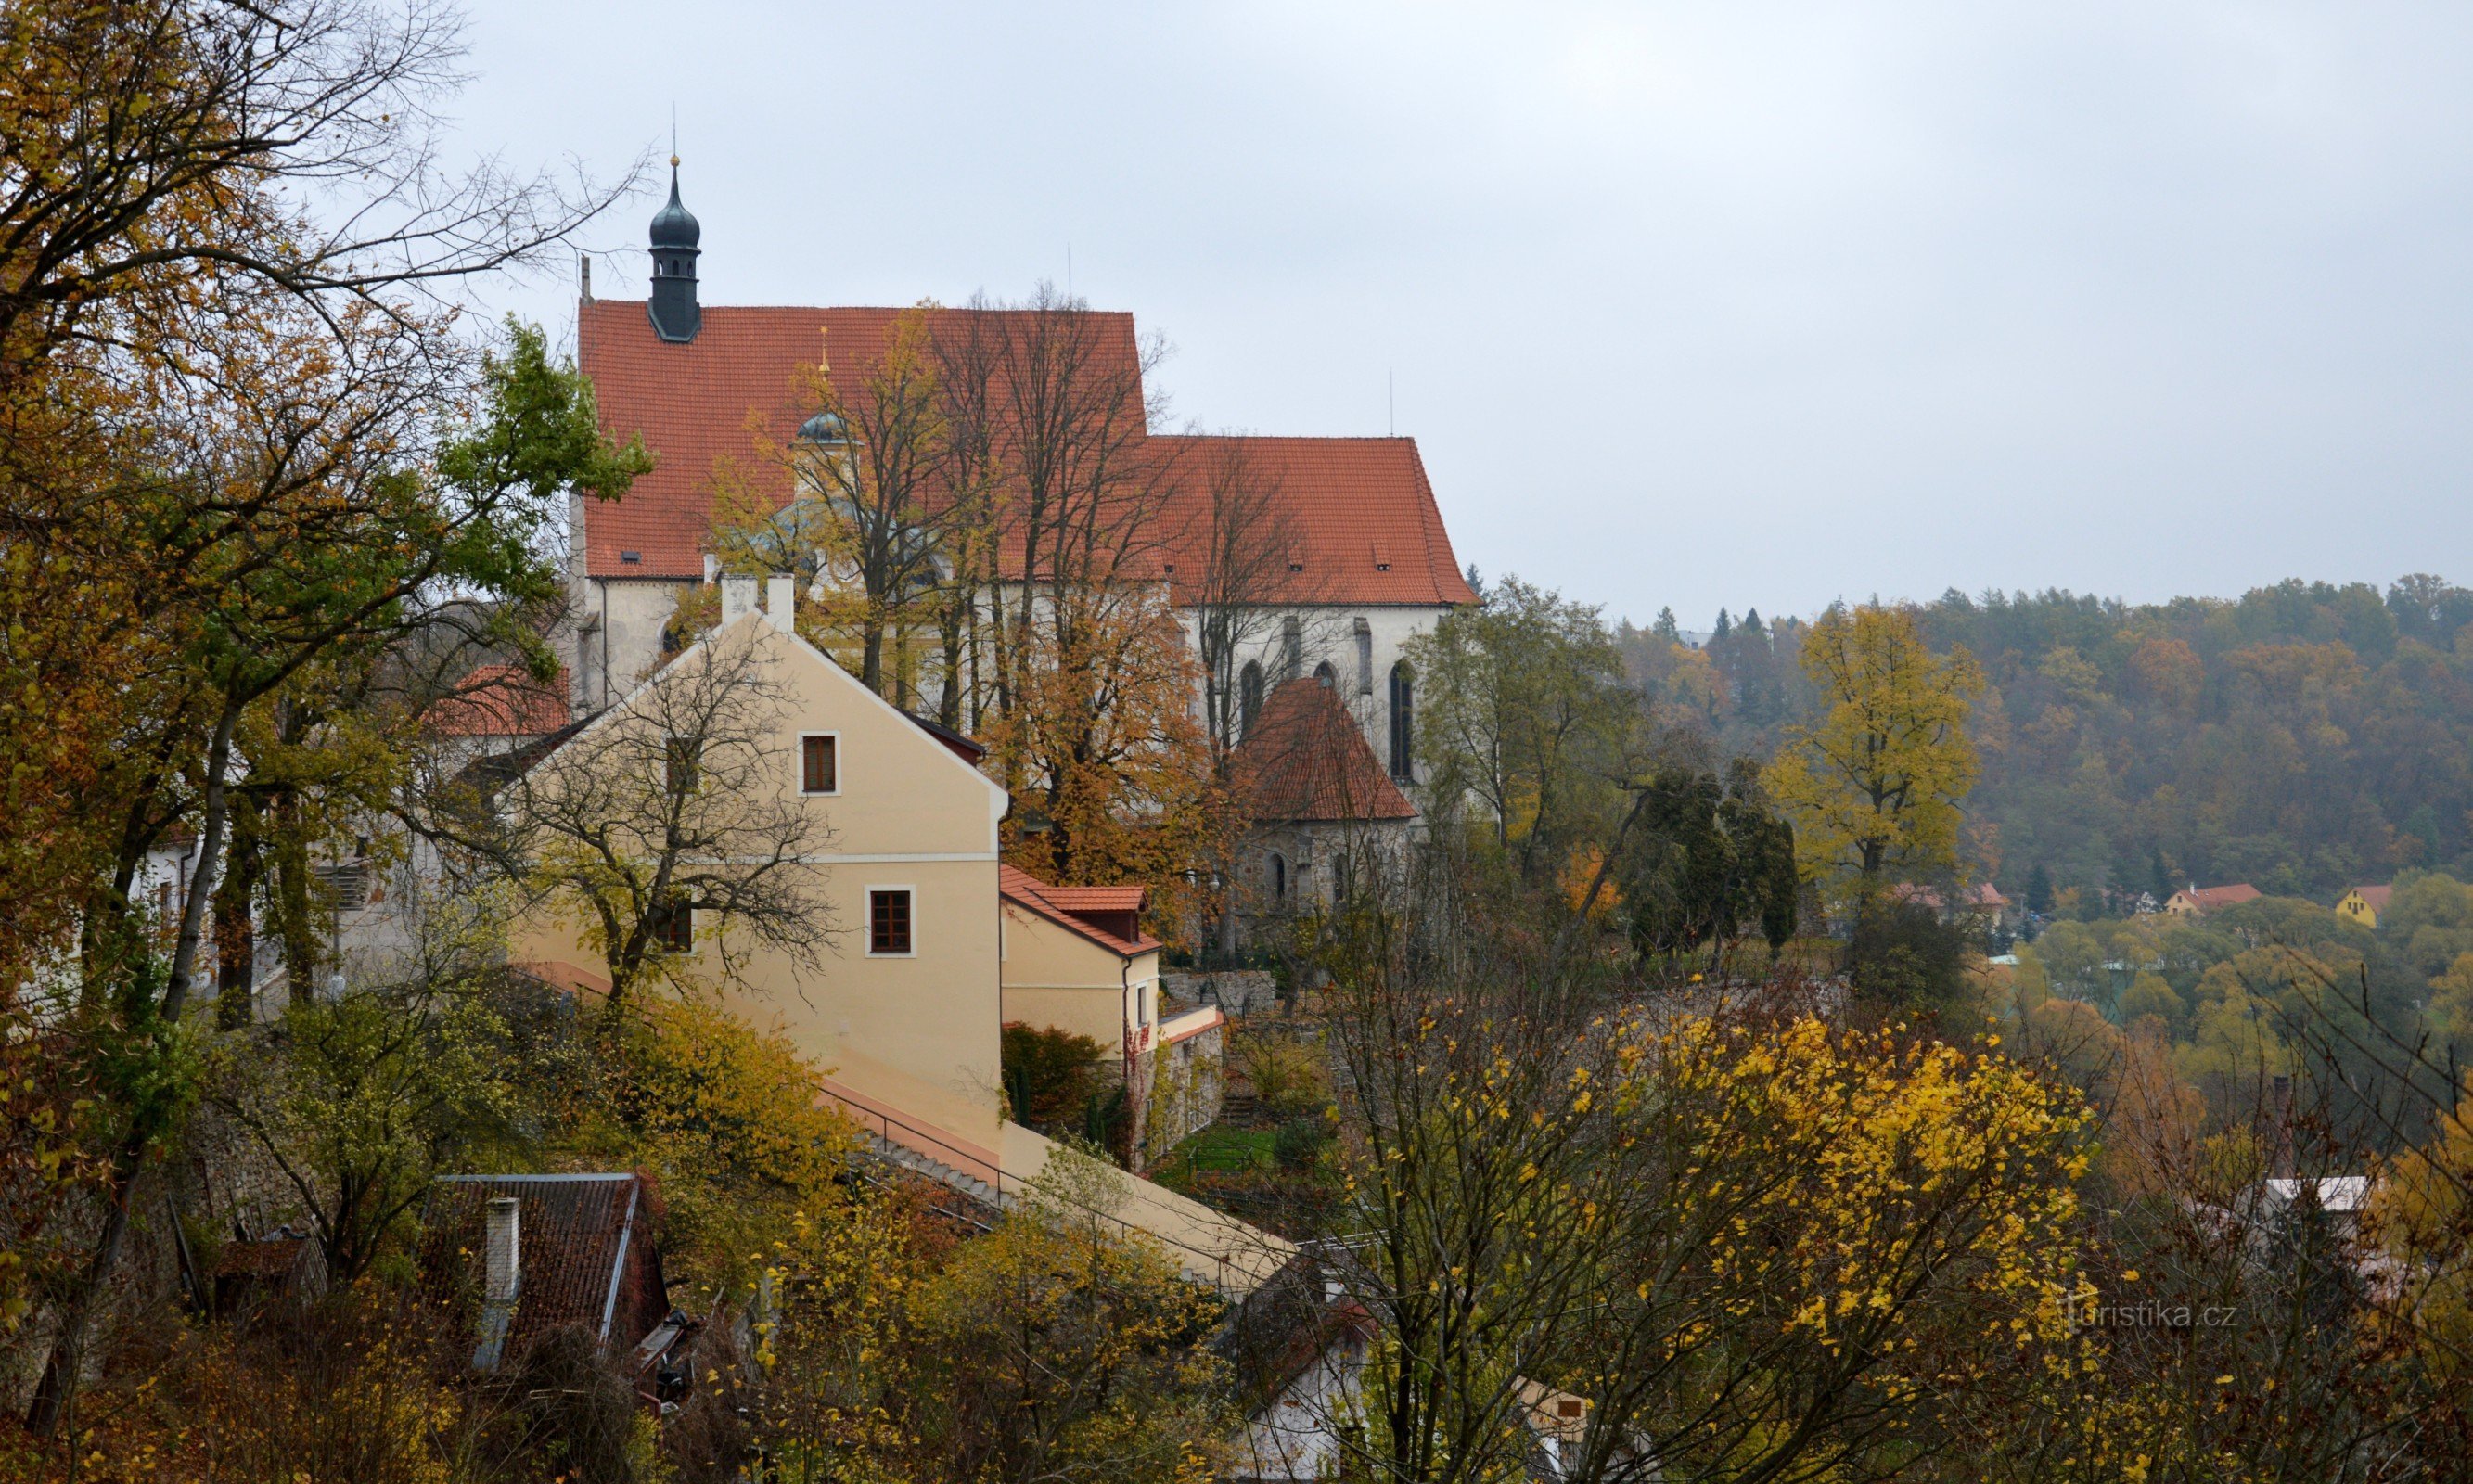 Bechyně - Φραγκισκανικό μοναστήρι